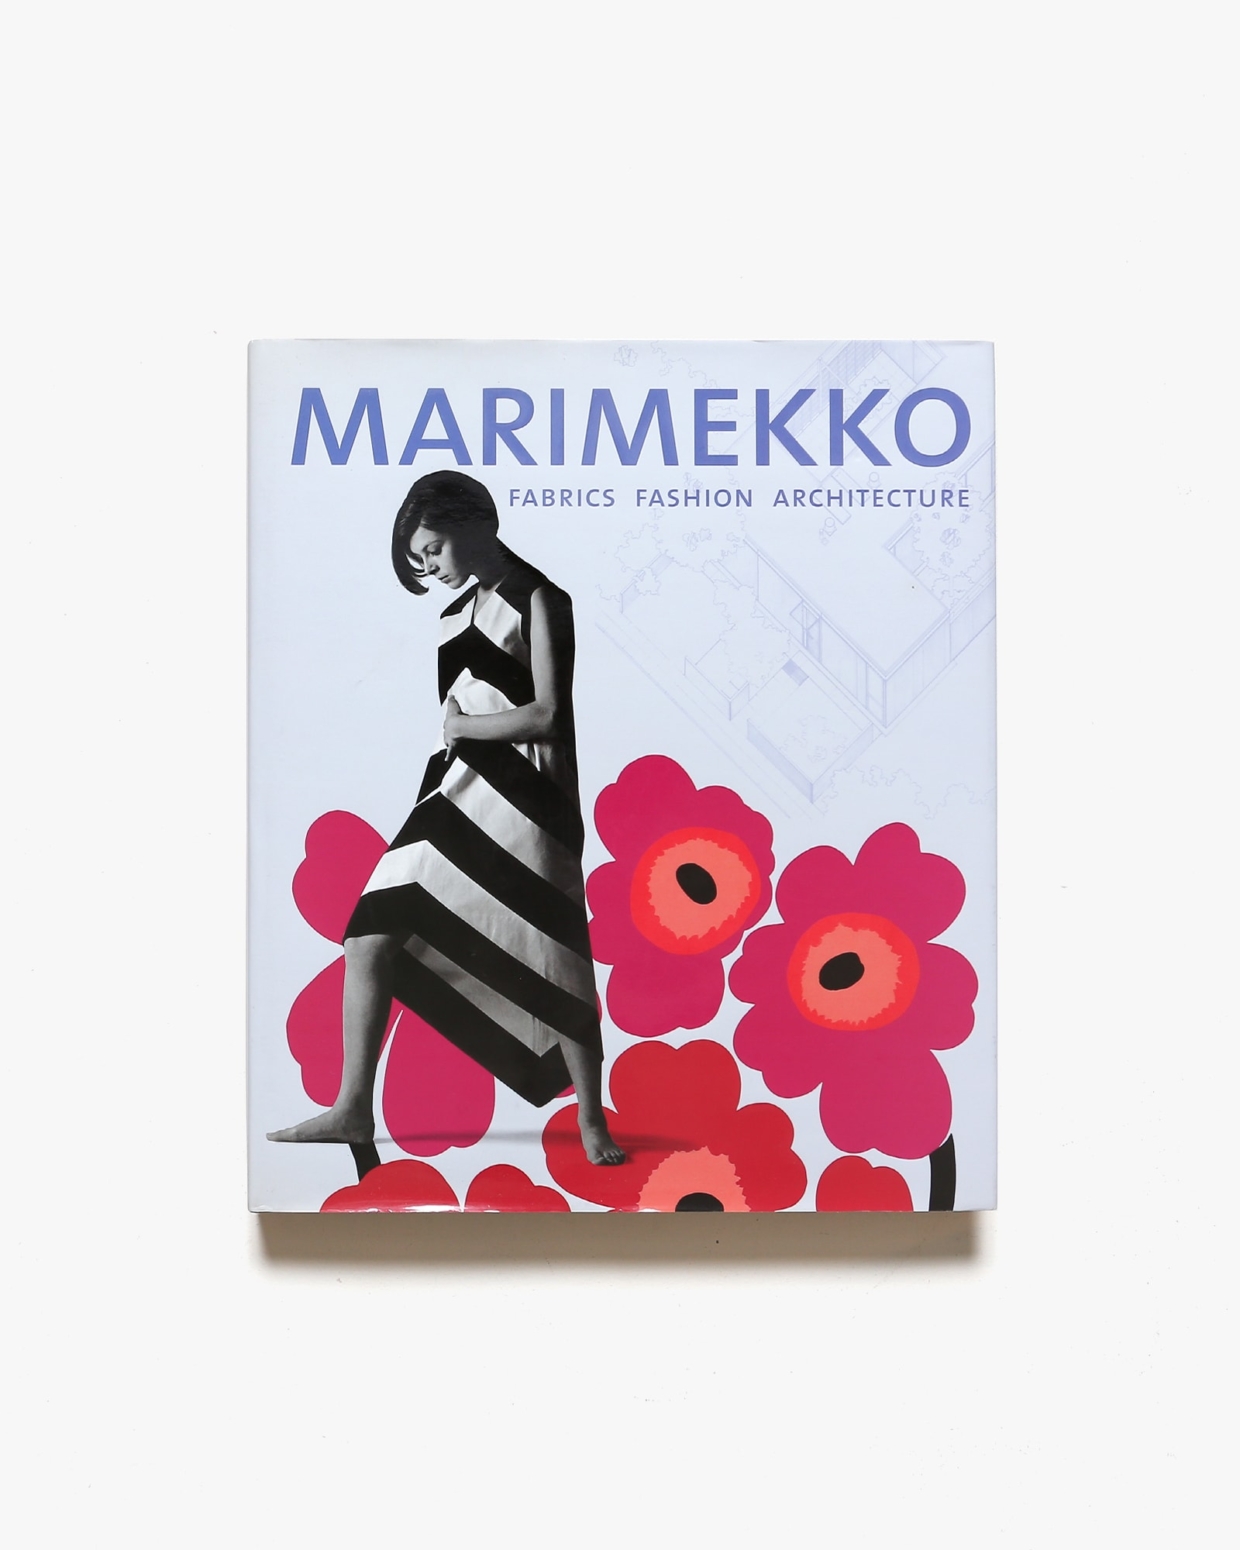 Marimekko: Fabrics, Fashion, Architecture | マリメッコ